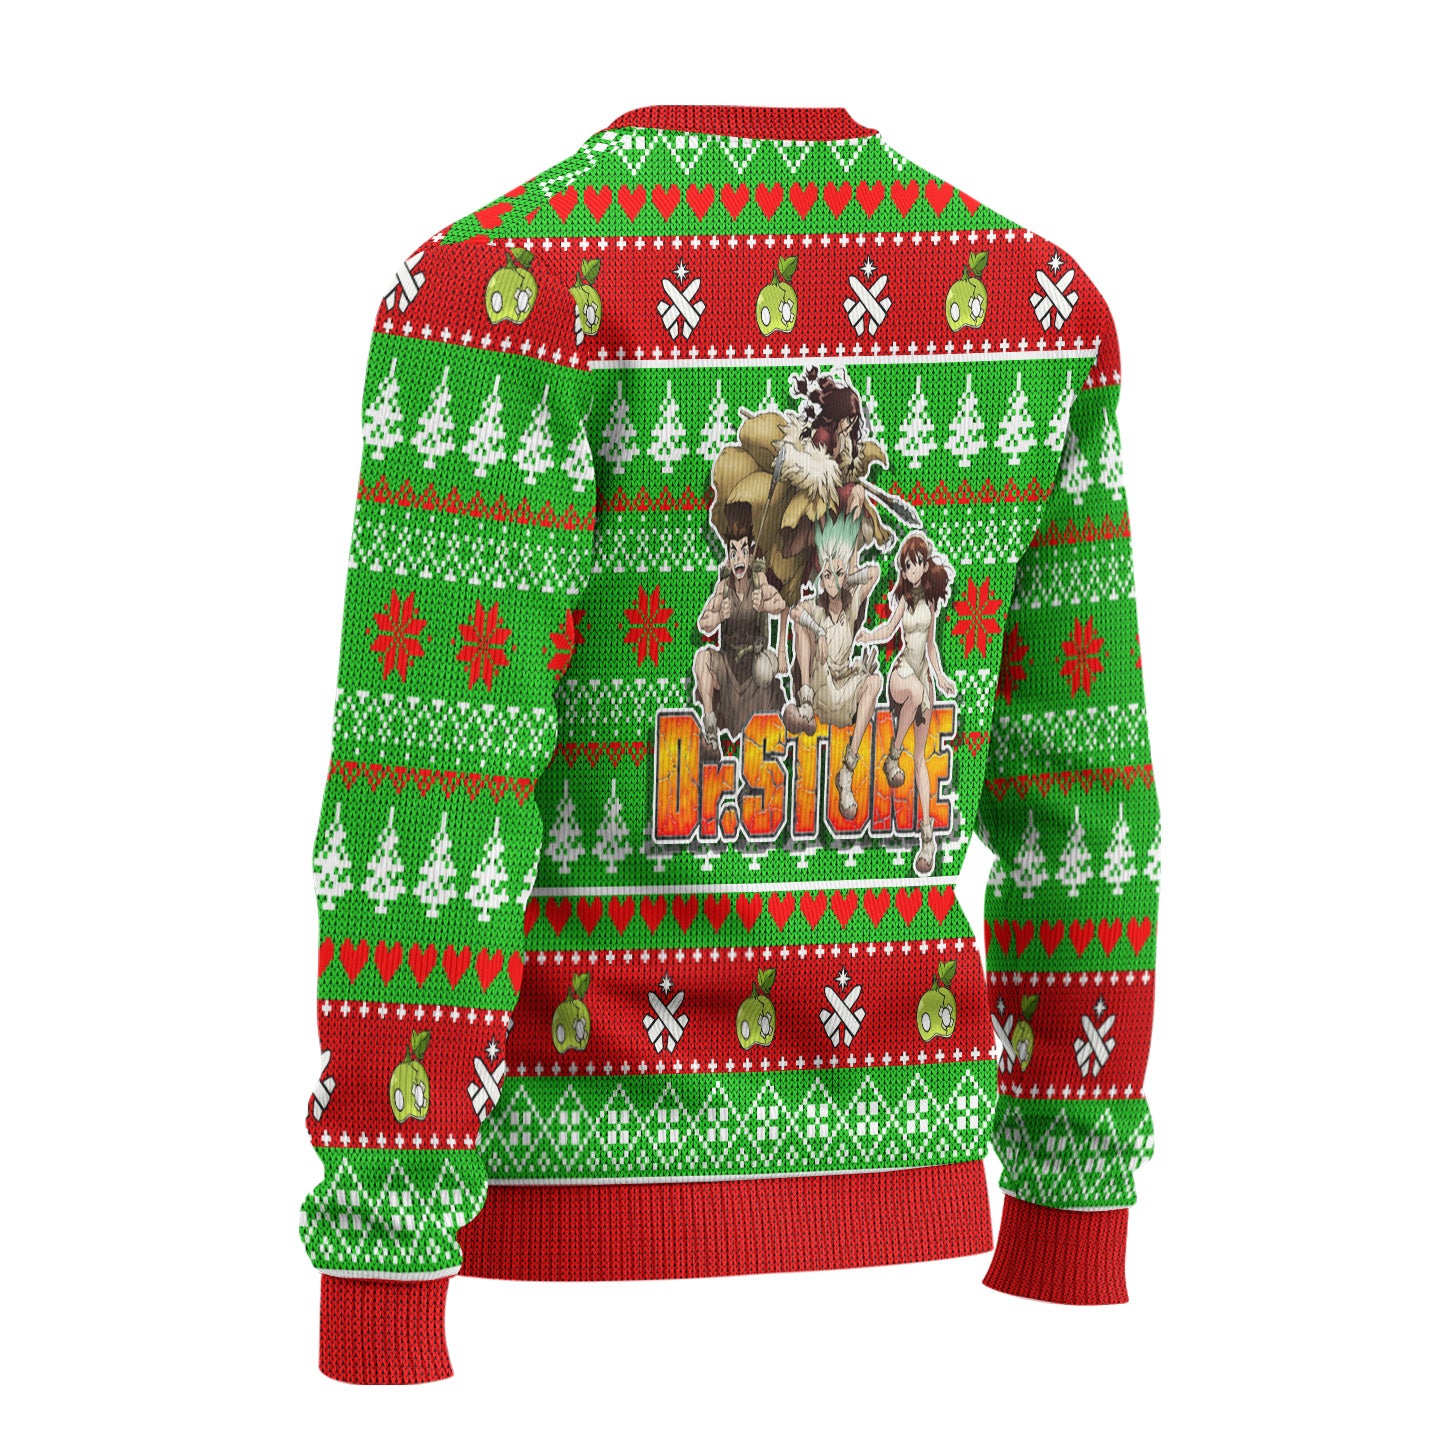 Kohaku x Ruri x Suika Anime Ugly Christmas Sweater Custom Dr Stone New Design